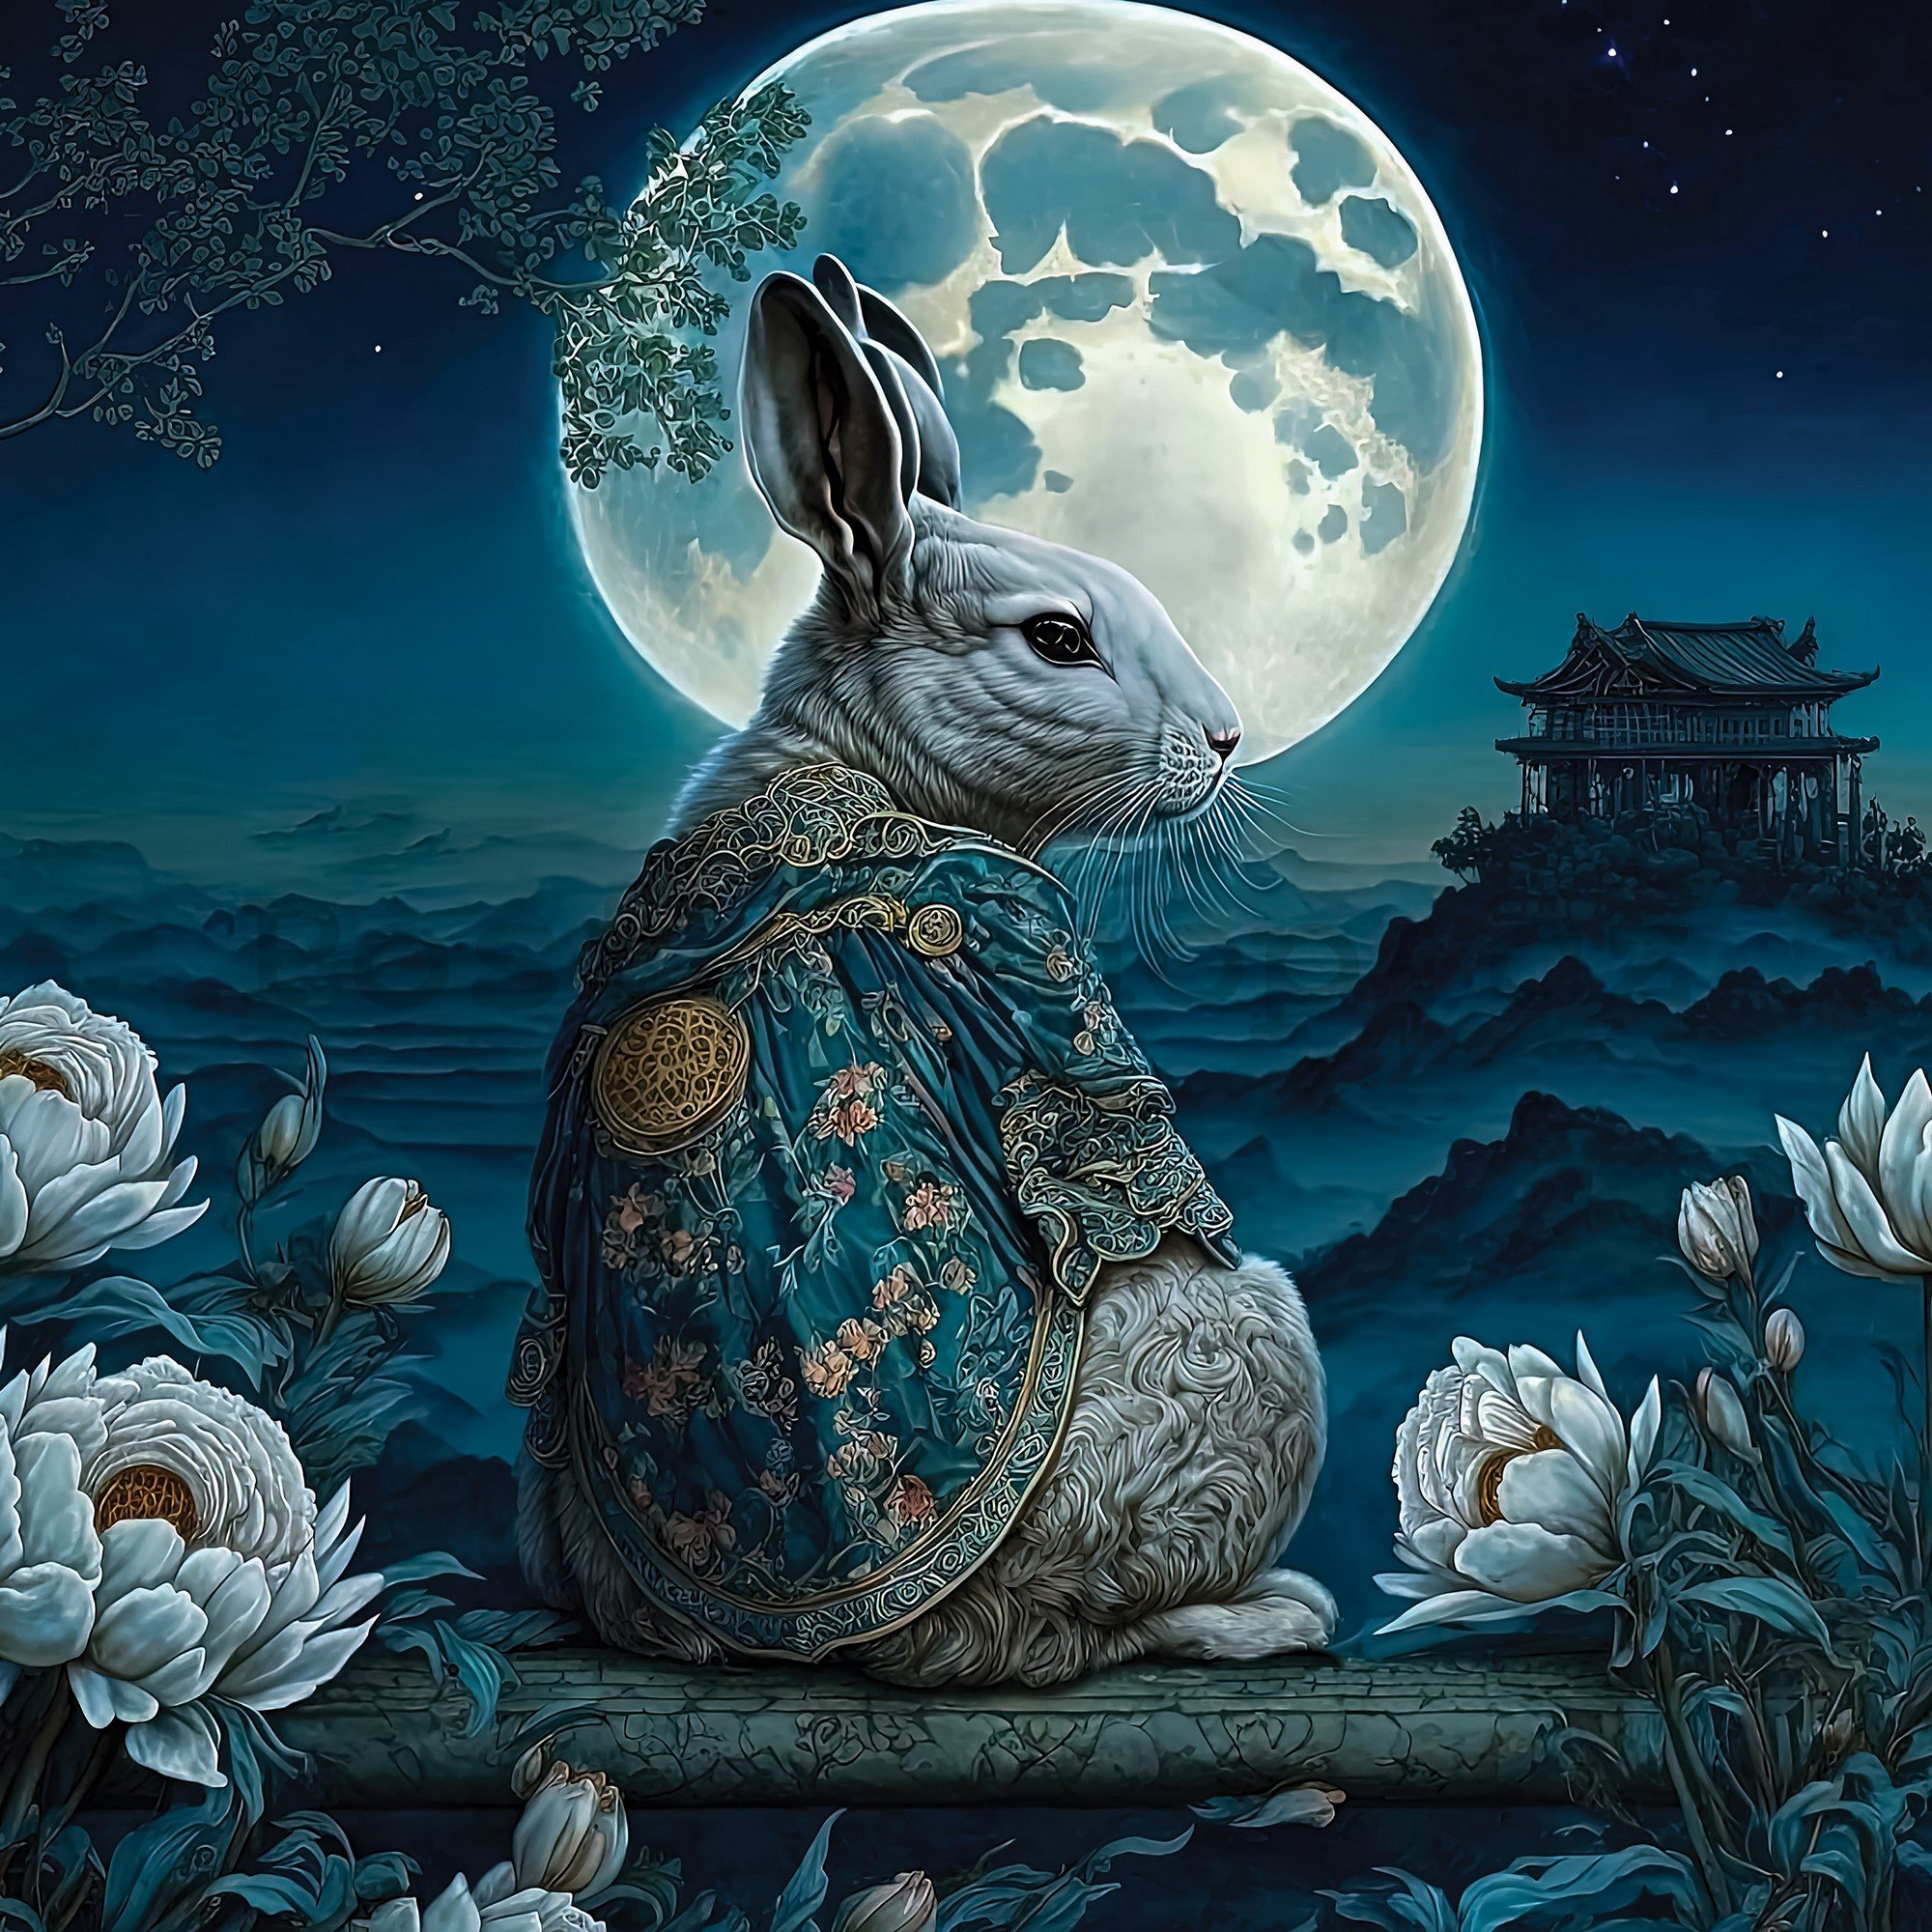 Fototapety vliesové: Art Orient rabbit moon - 368x254 cm